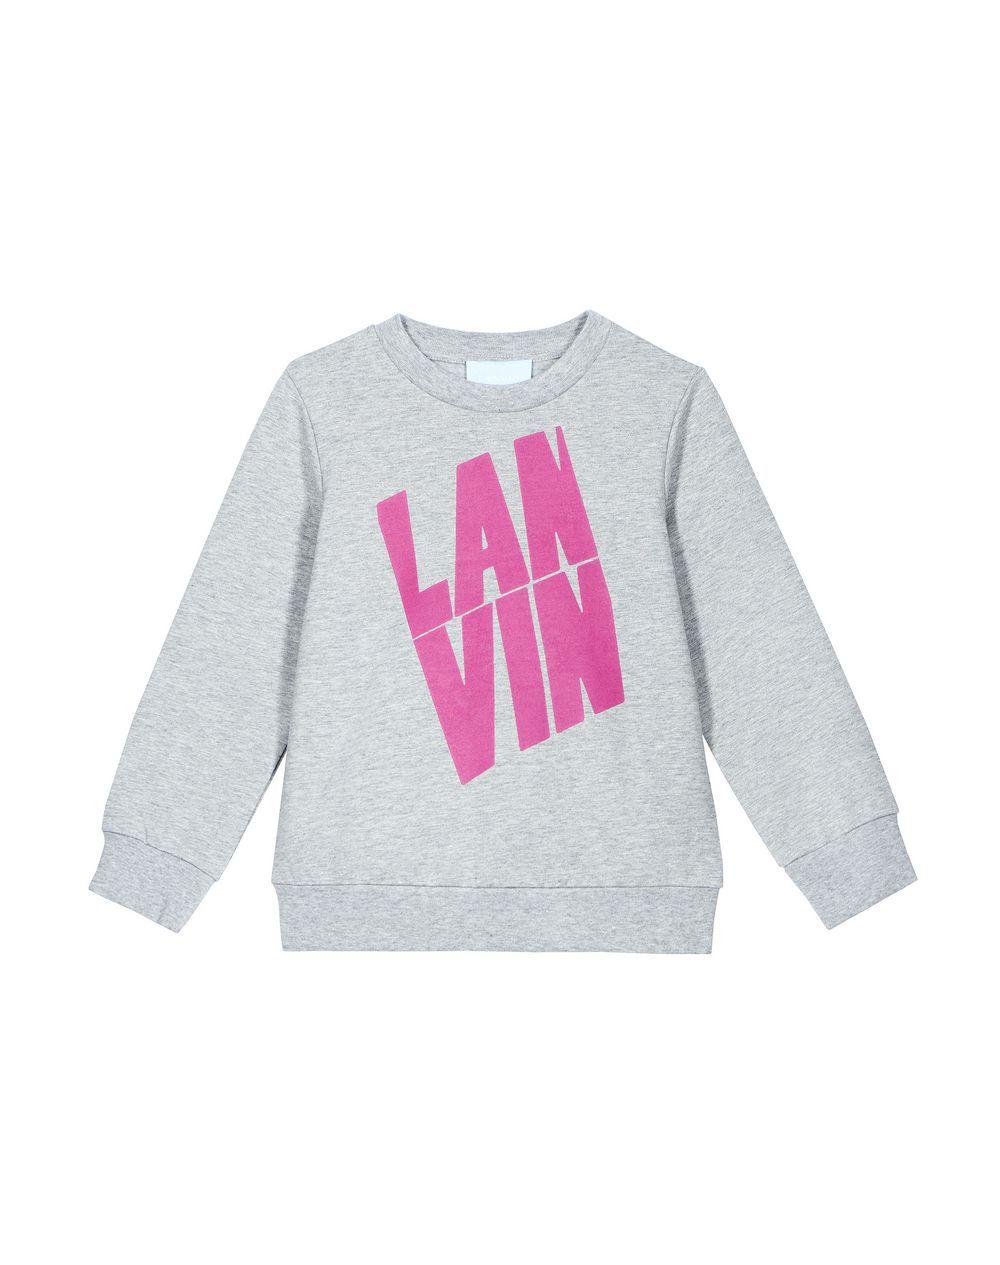 Lanvin Logo - Lanvin GRAY SWEATSHIRT WITH LANVIN LOGO , Top Childrenswear ...